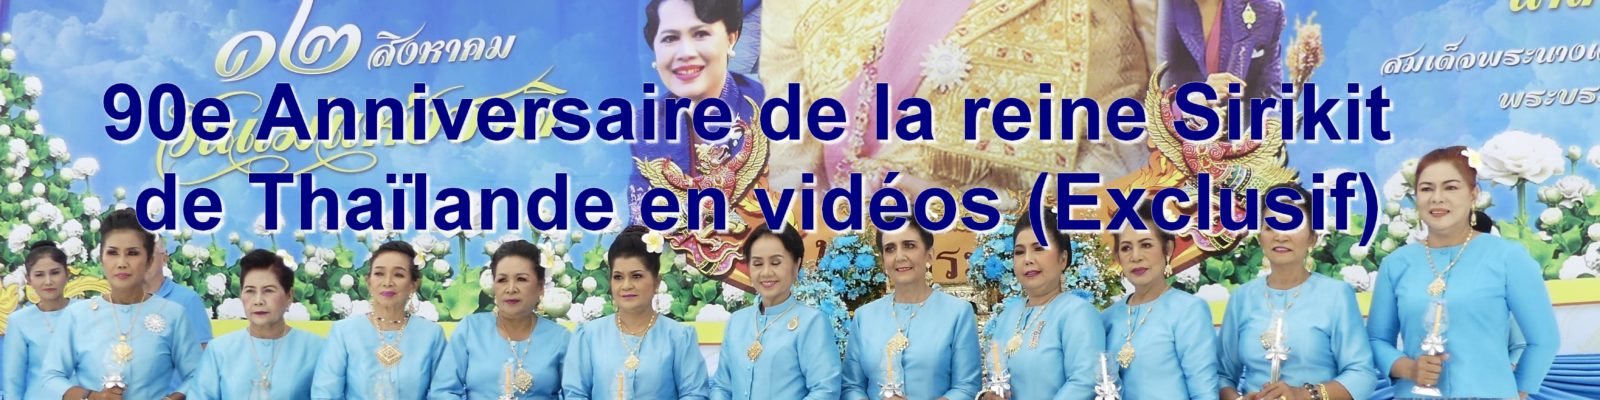 Anniversaire de la reine Sirikit de Thaïlande en vidéos (Exclusif)